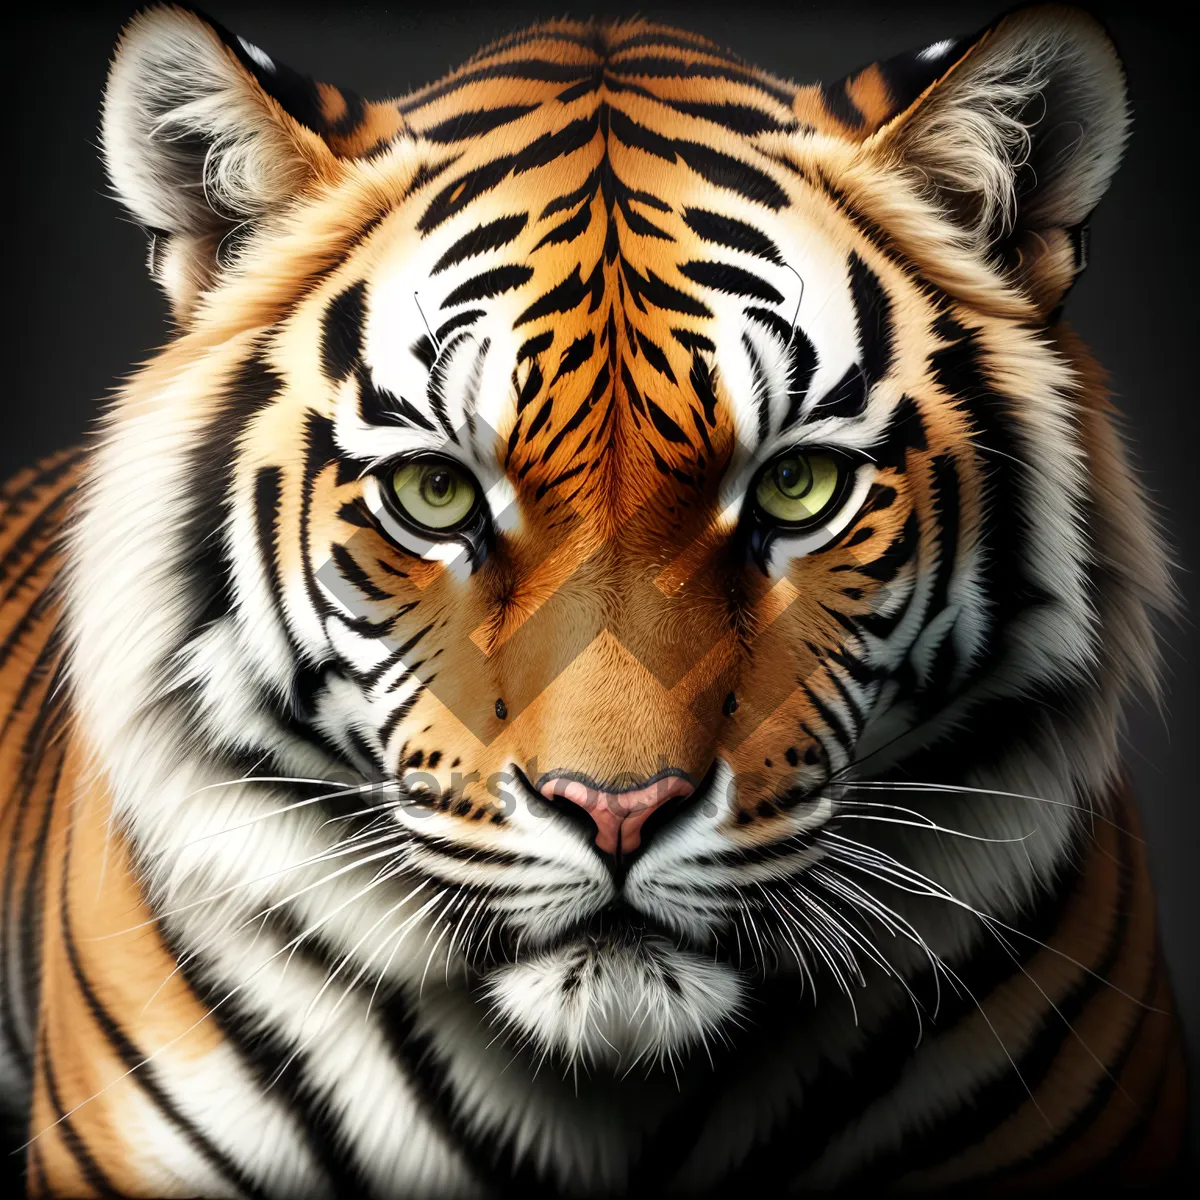 Picture of Fierce Striped Jungle Hunter: A Majestic Tiger